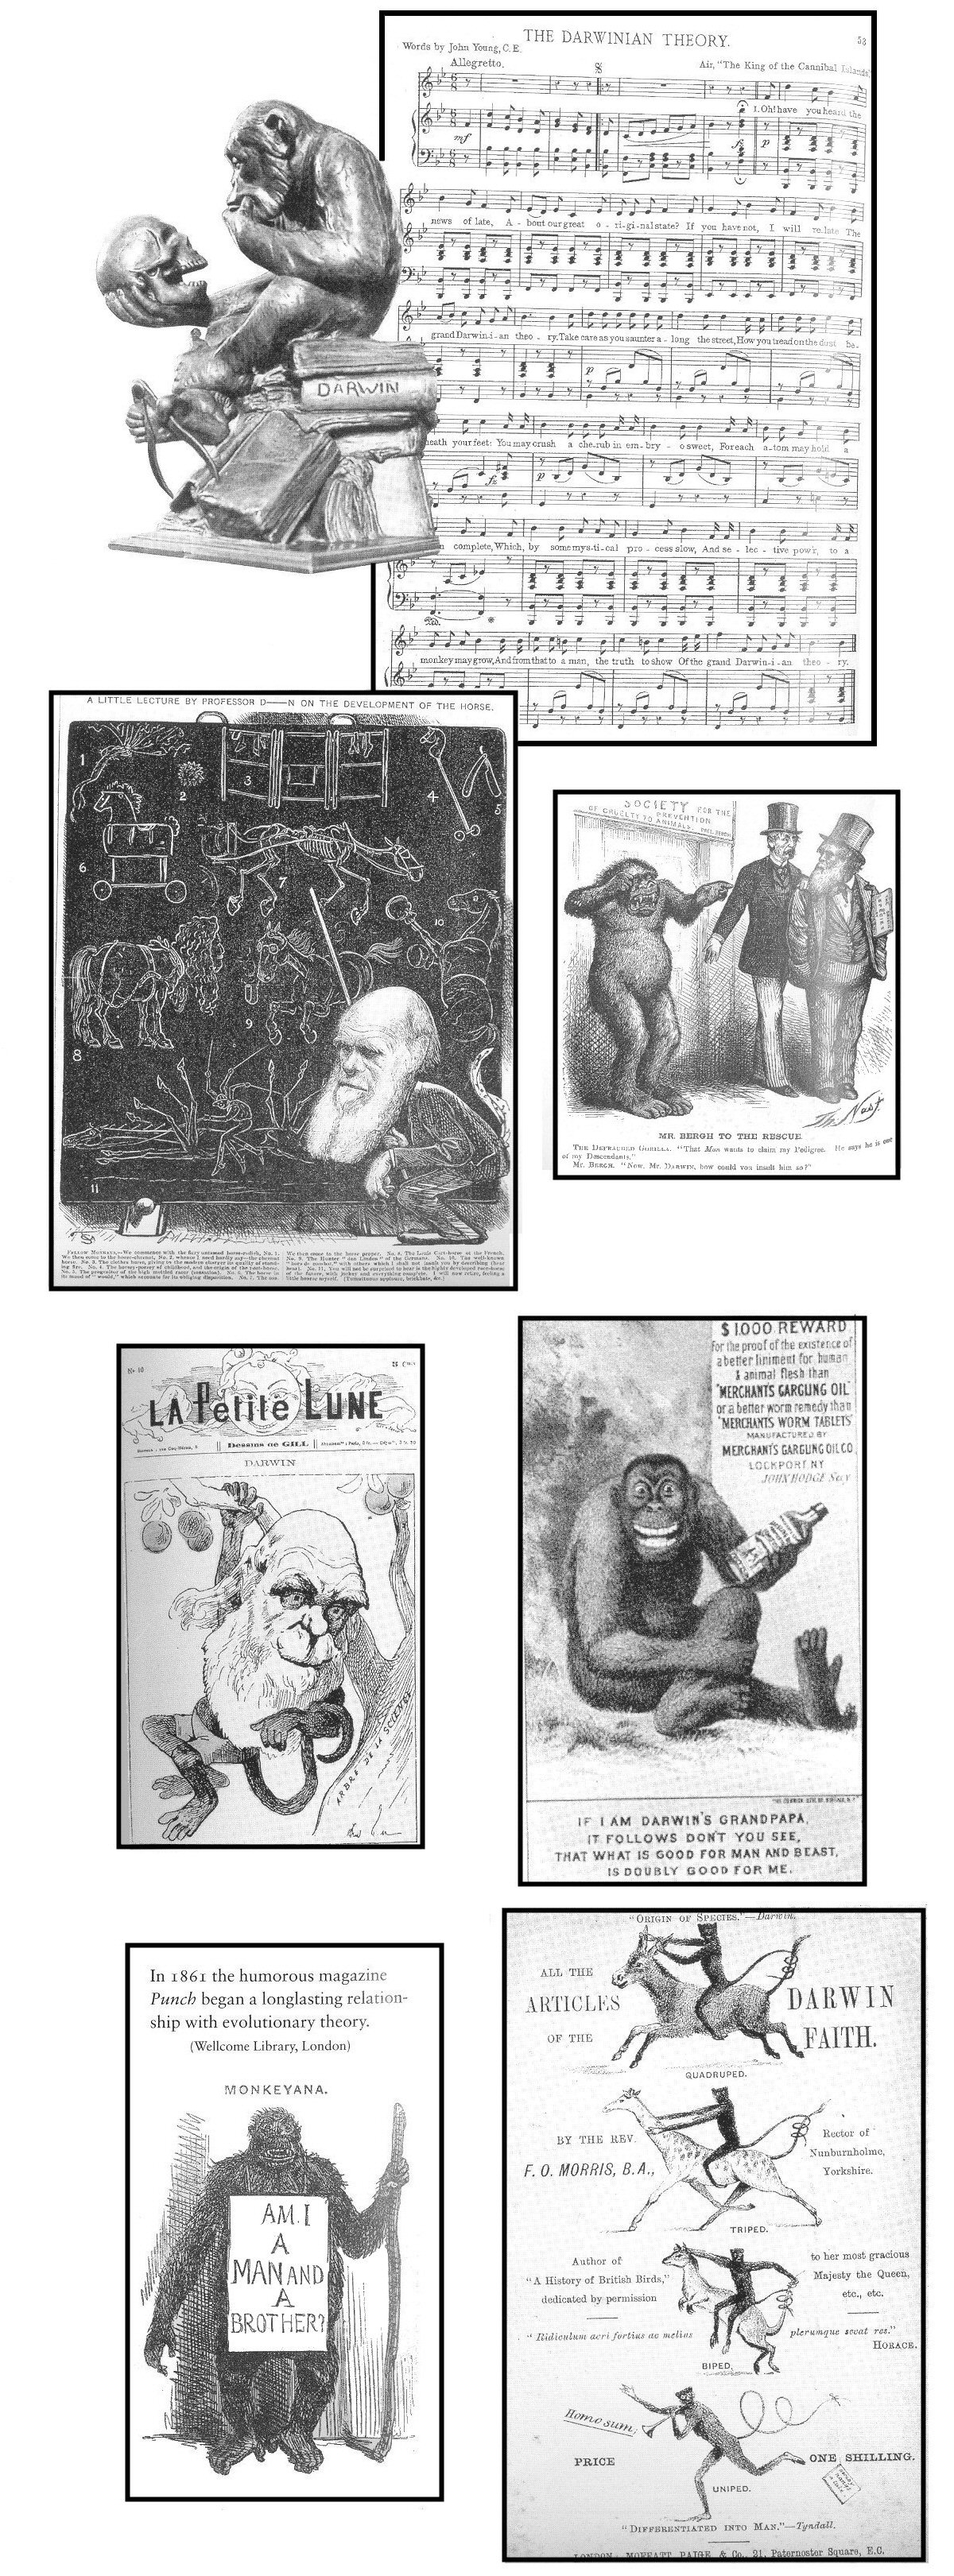 Darwin caricatures